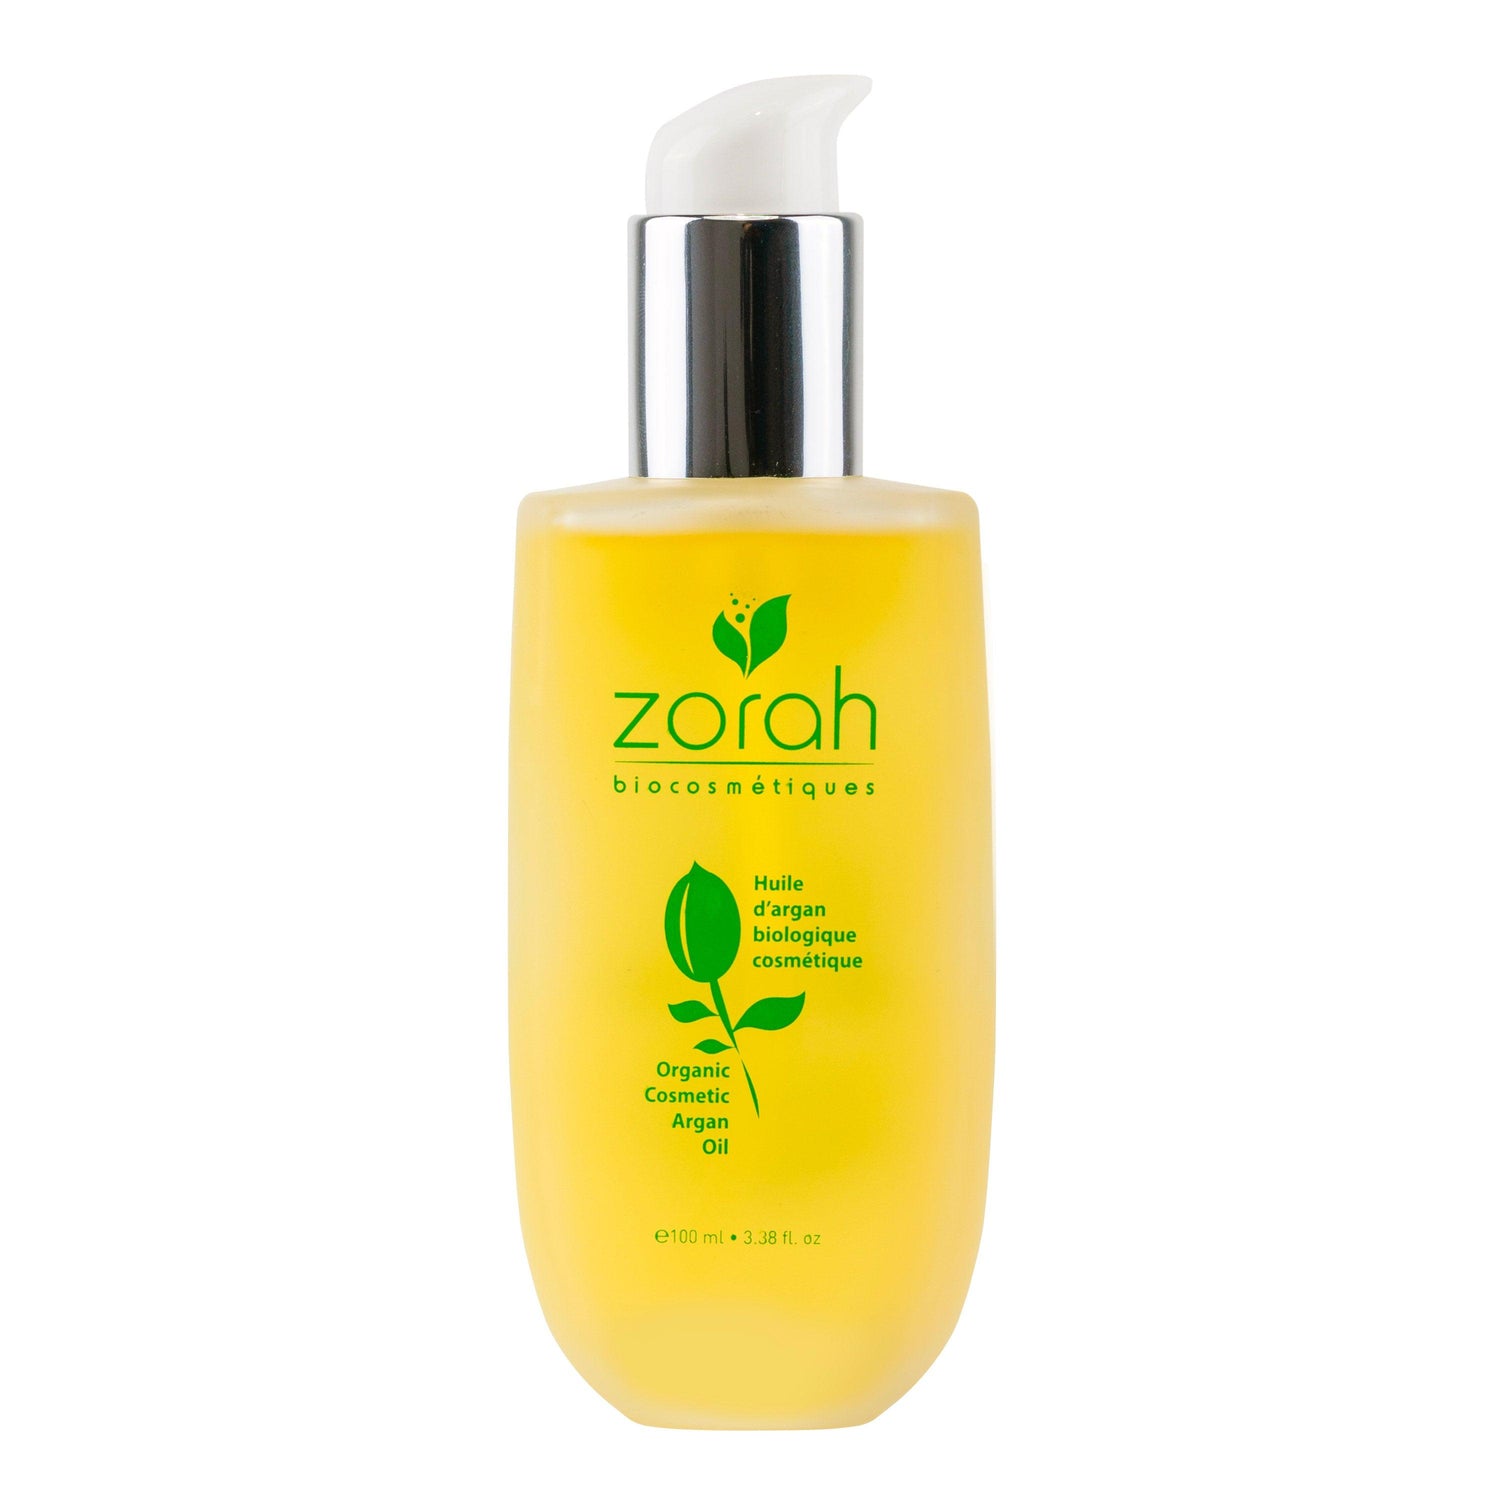 Pure Organic Argan Oil - Zorah biocosmétiques